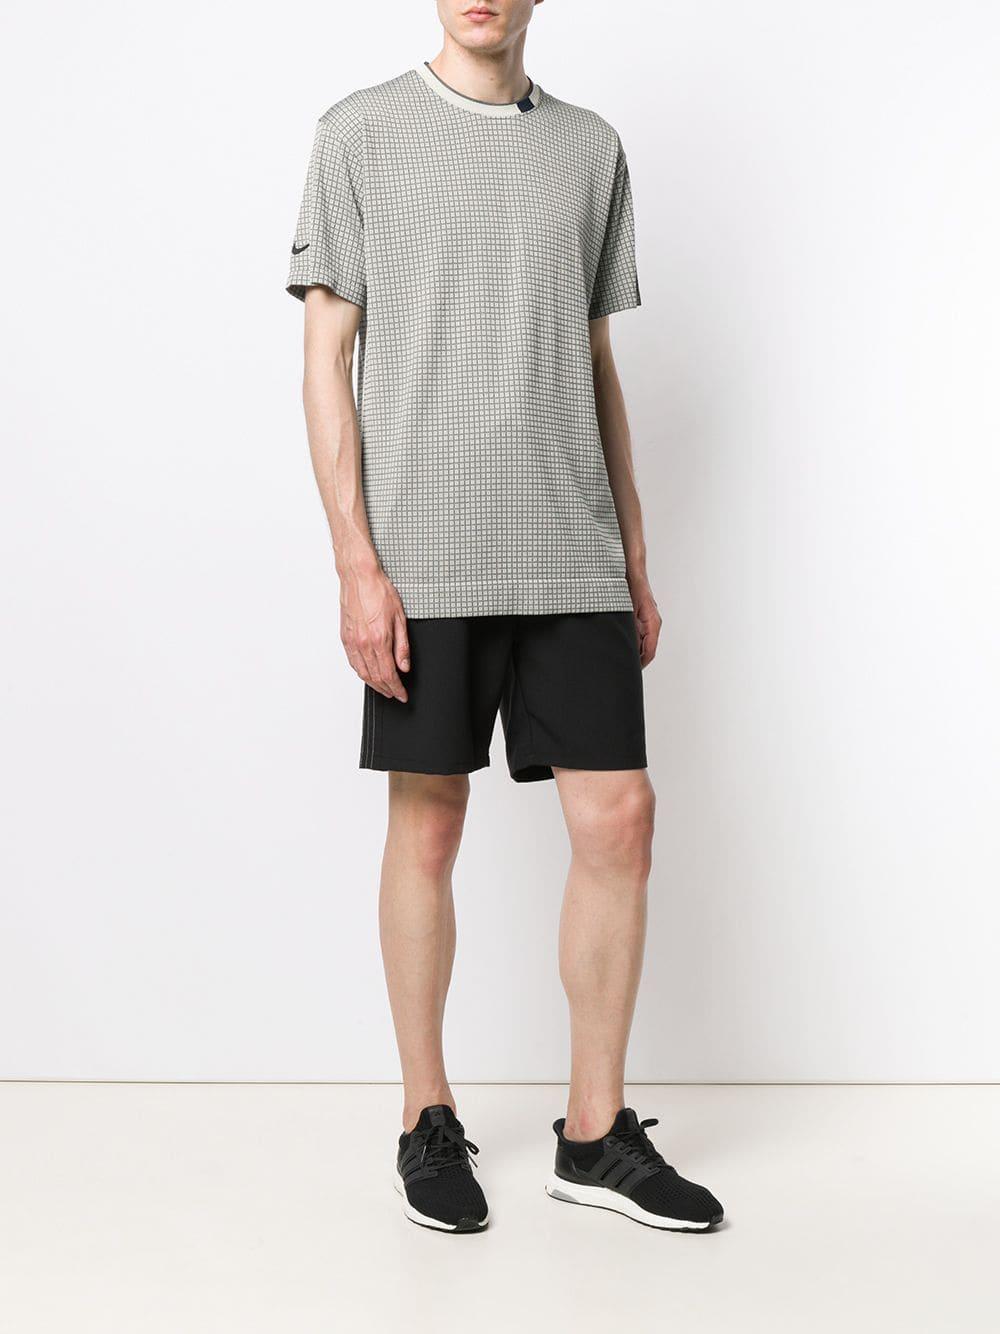 Nike Tech Pack T-shirt in Gray for Men - Lyst